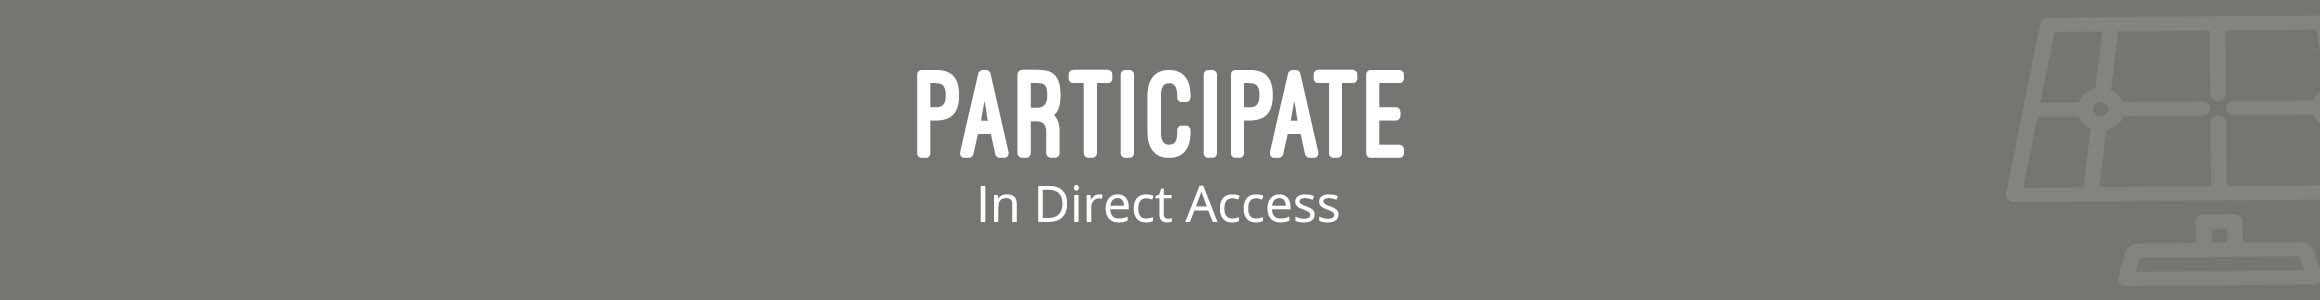 Participate In Direct Access